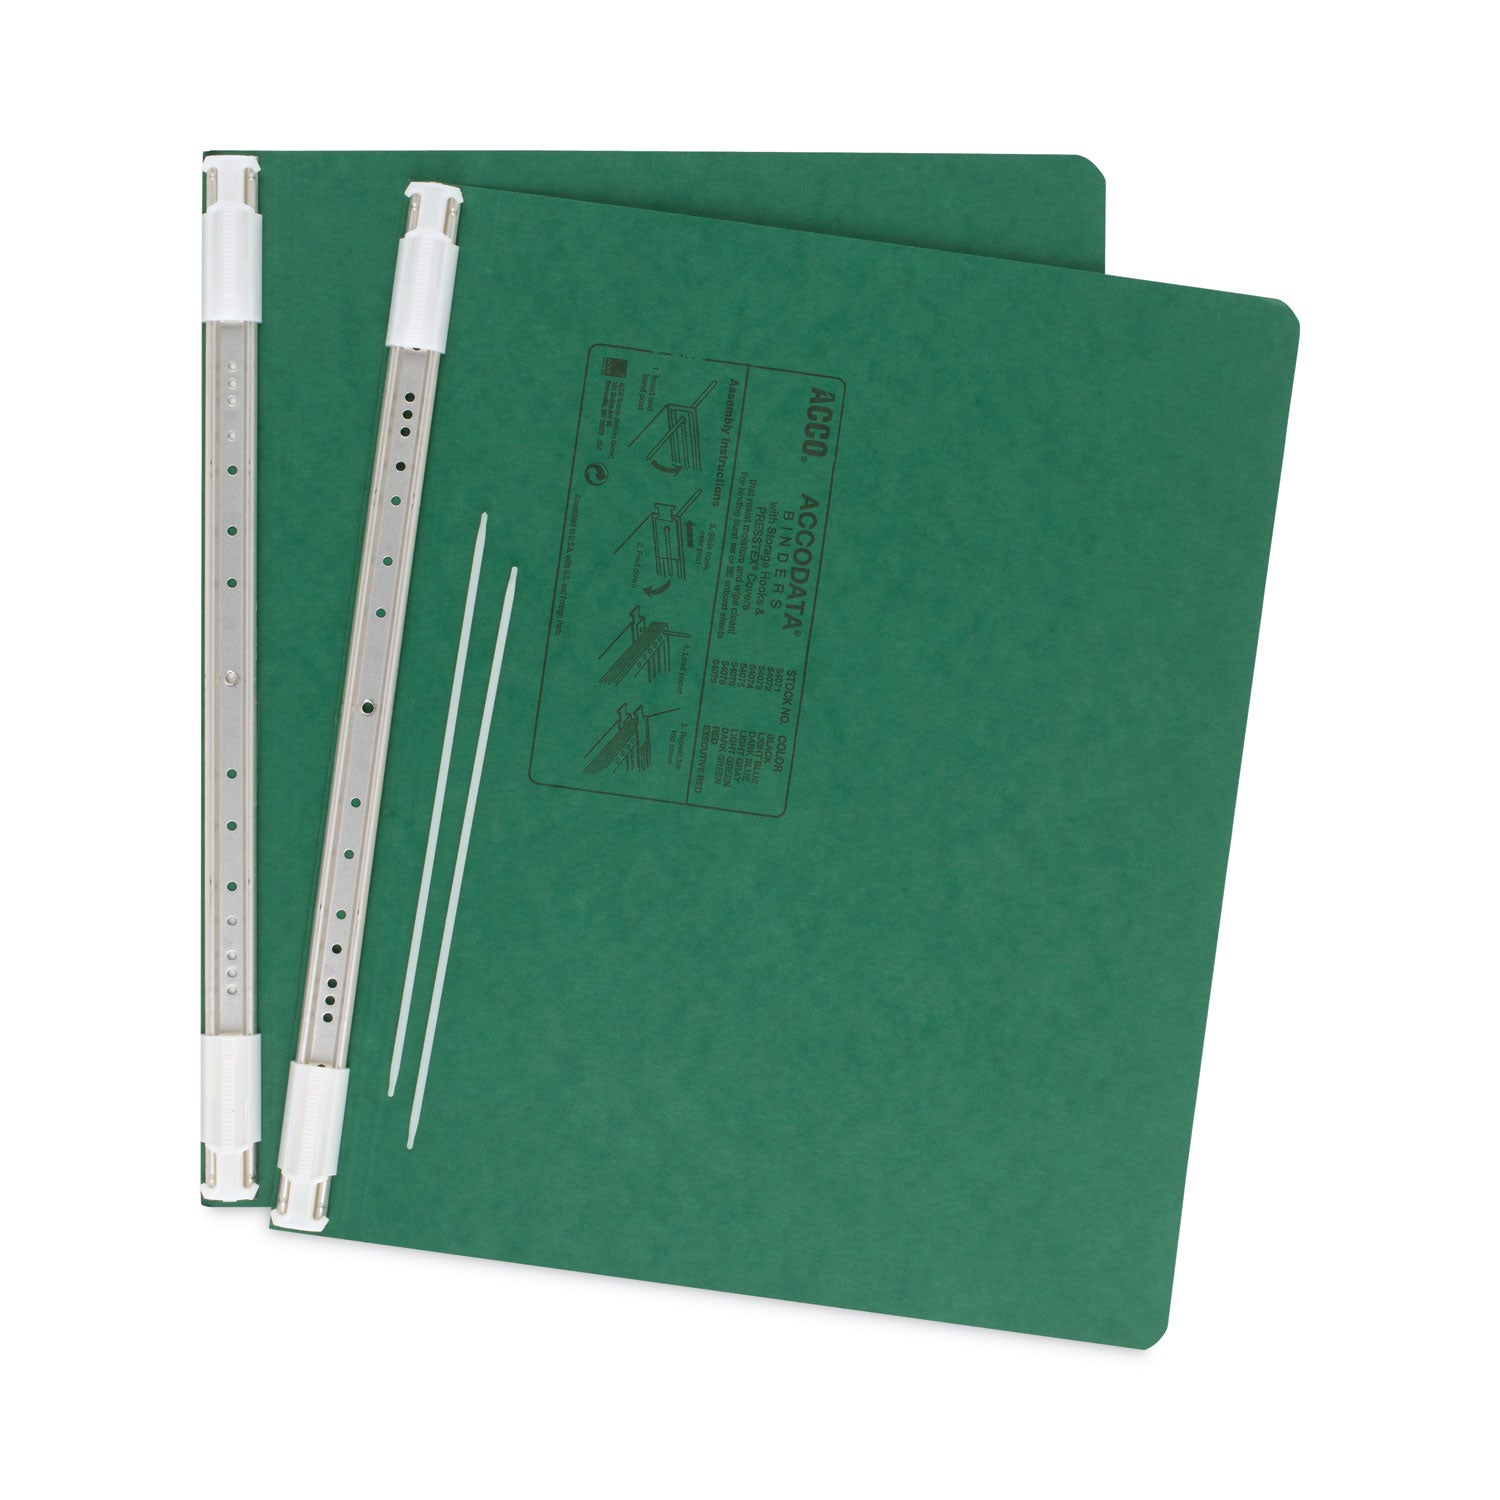 PRESSTEX Covers with Storage Hooks, 2 Posts, 6" Capacity, 14.88 x 11, Dark Green - 